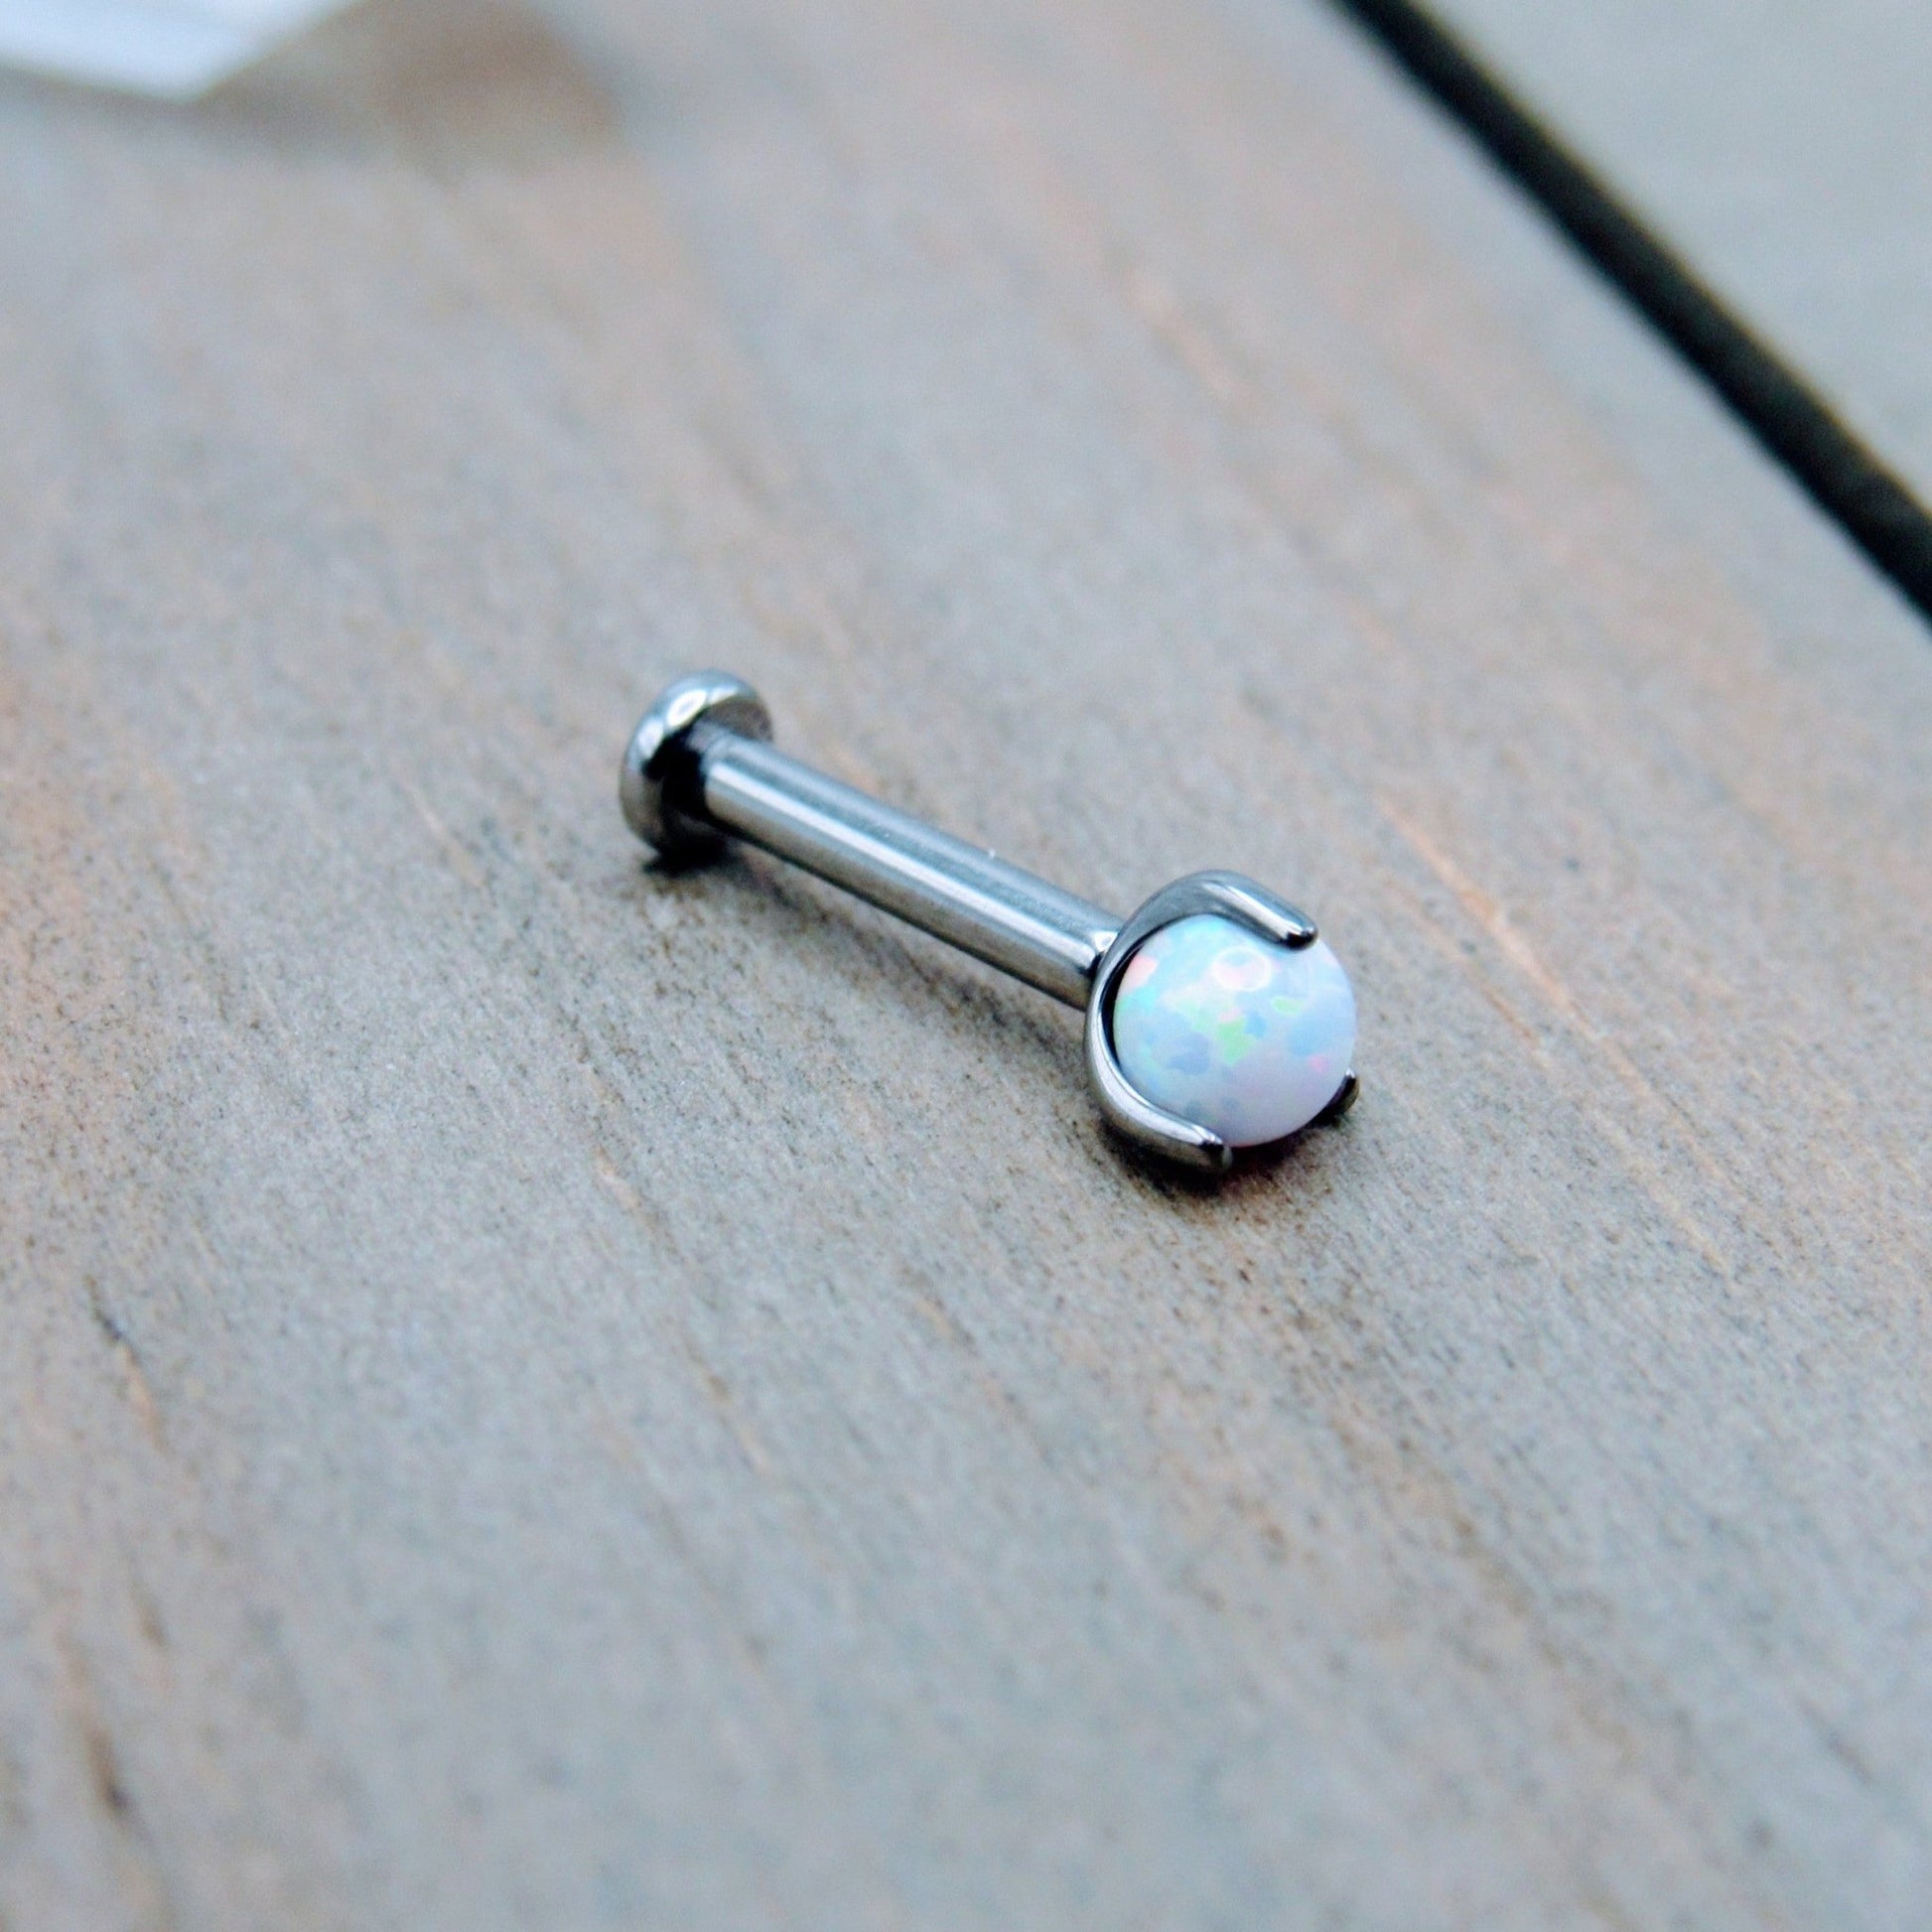 16g White opal titanium flat back earring stud helix lip cartilage tragus body piercing jewelry earring - Siren Body Jewelry